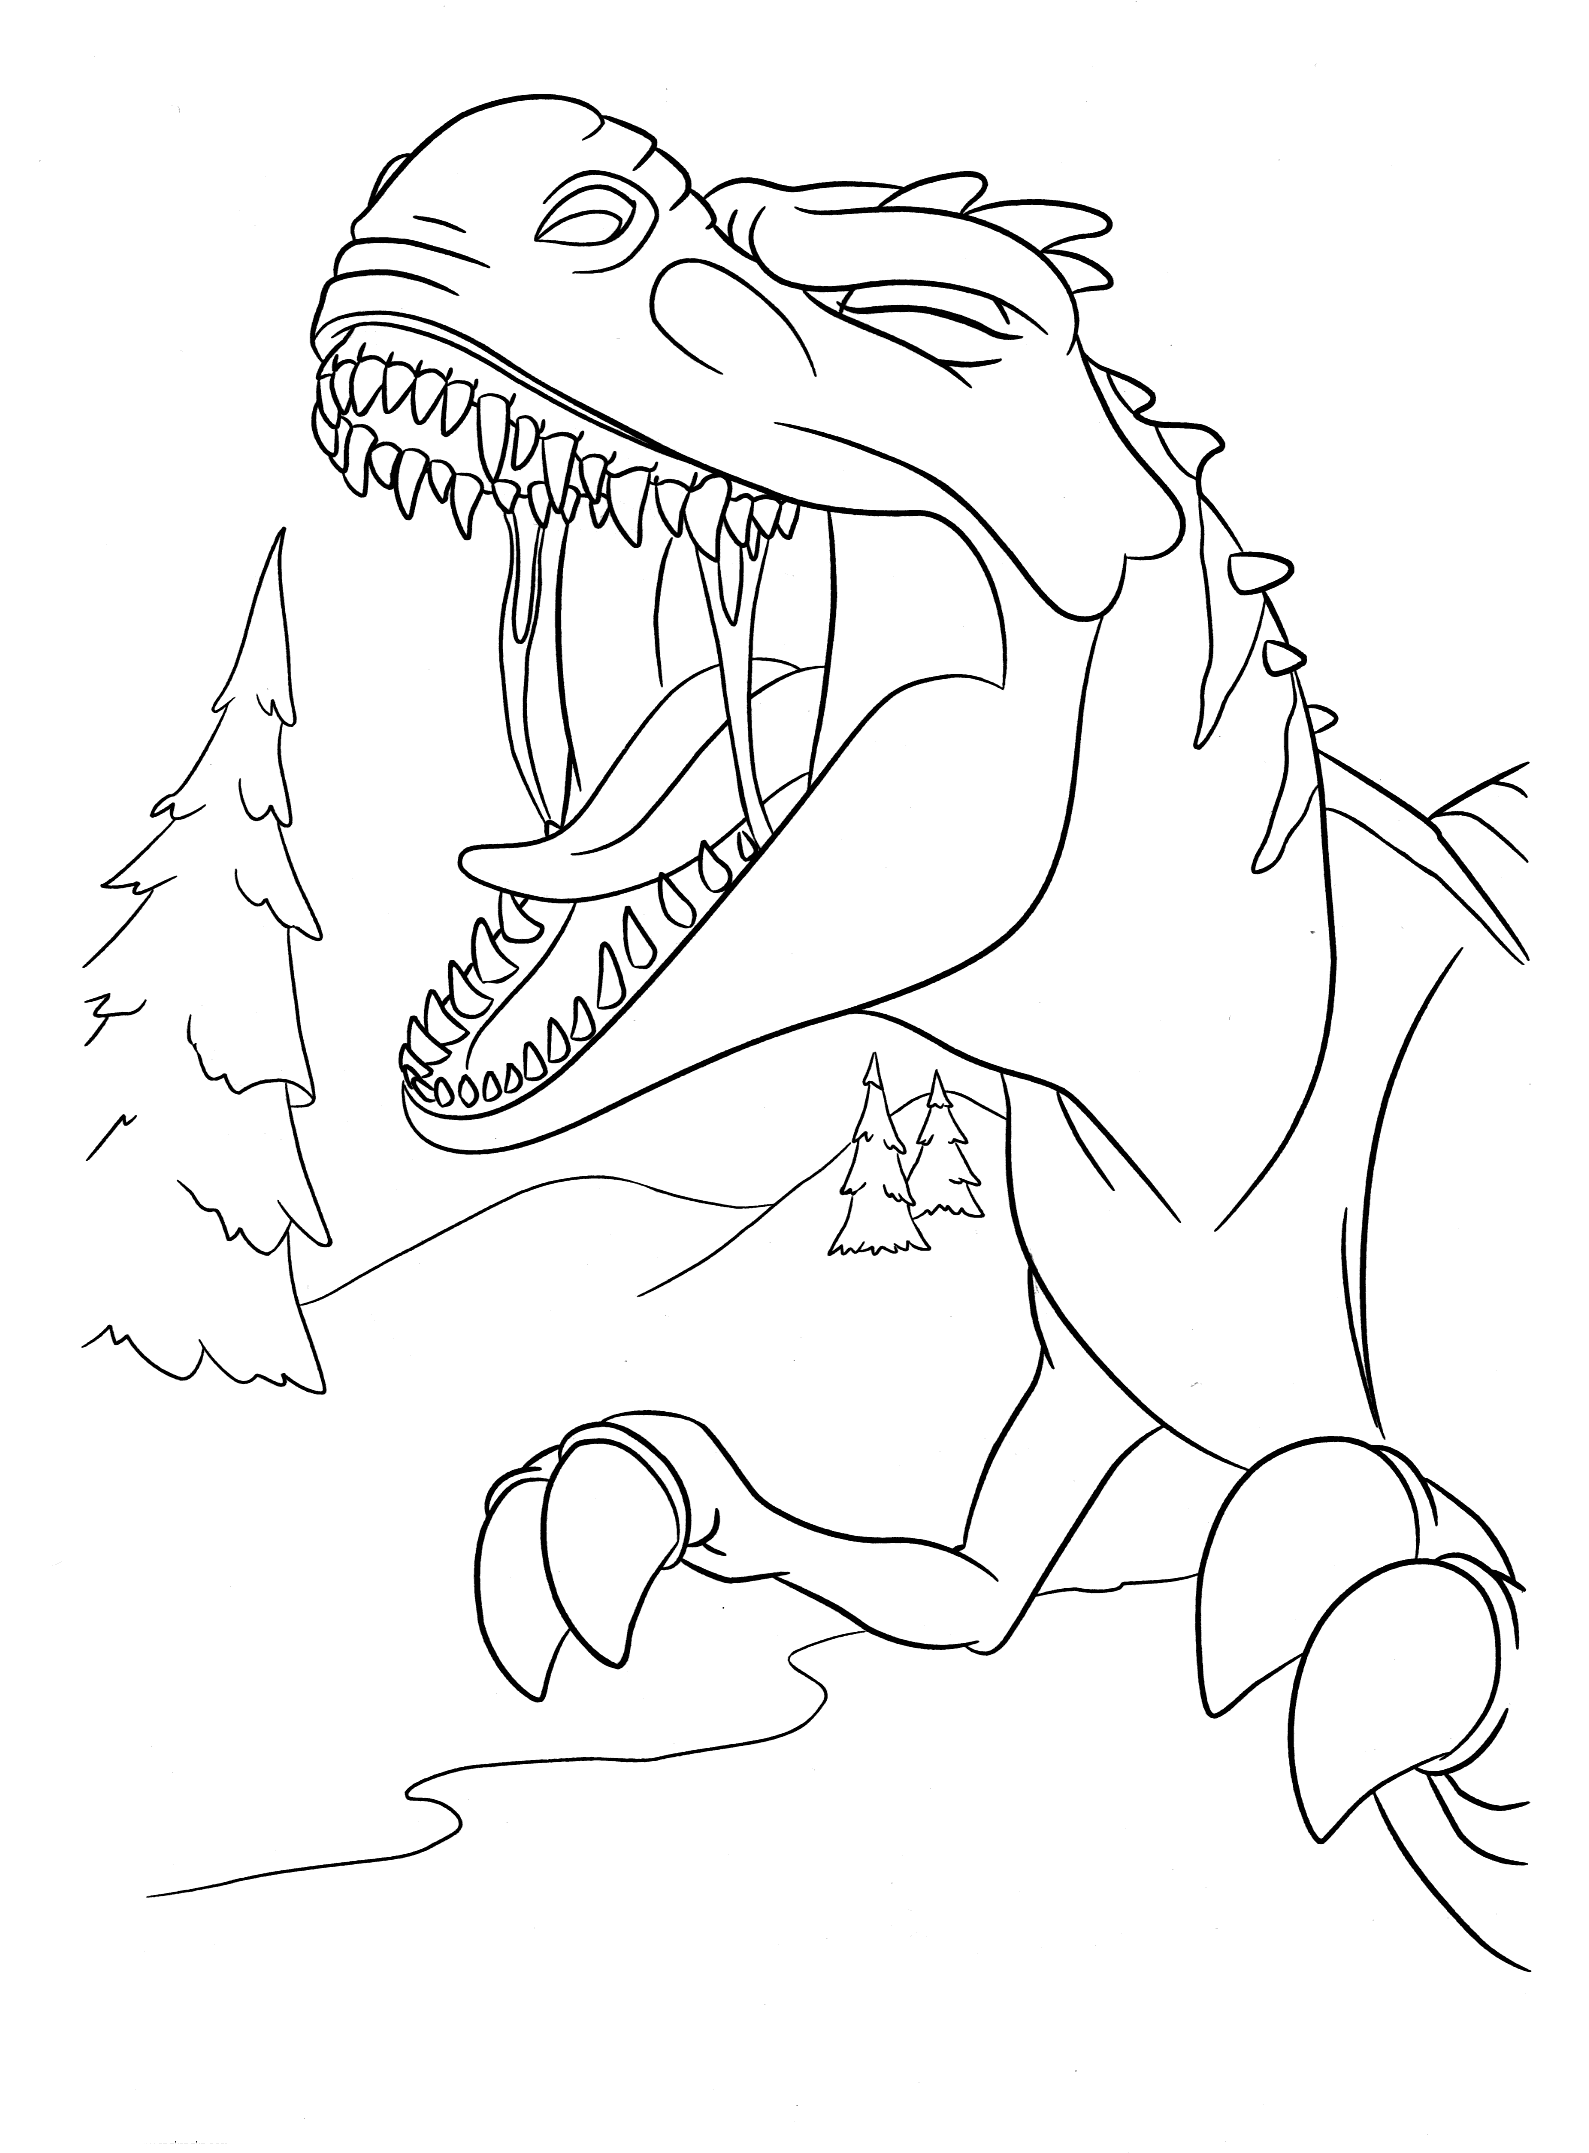 Coloring page - Dinosaurs loud roar